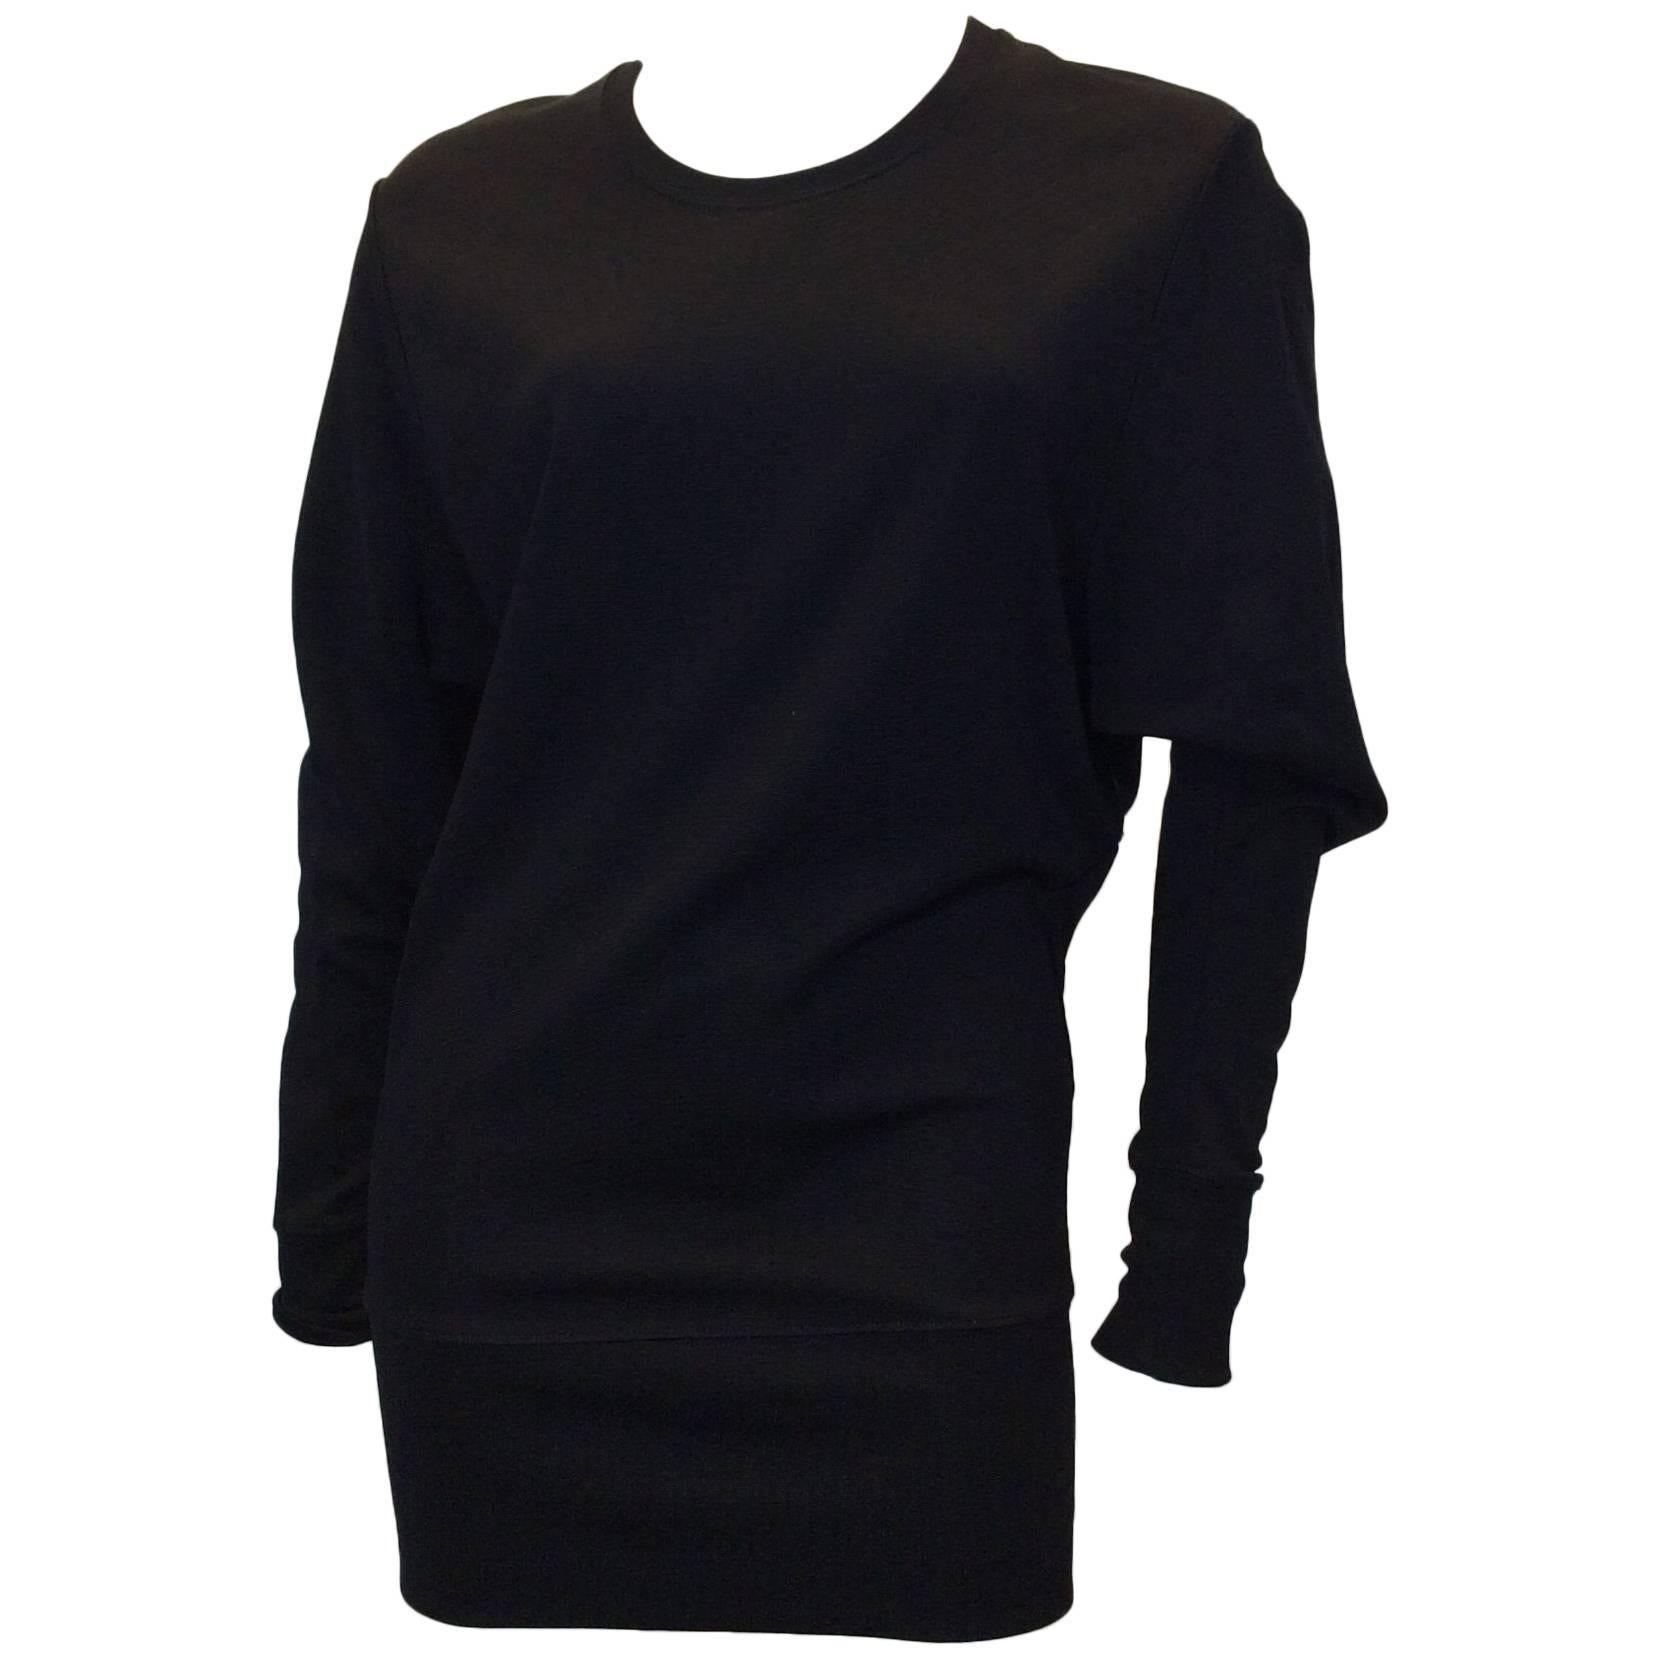 Helmut Lang Black Long Sleeve NWT Dress For Sale